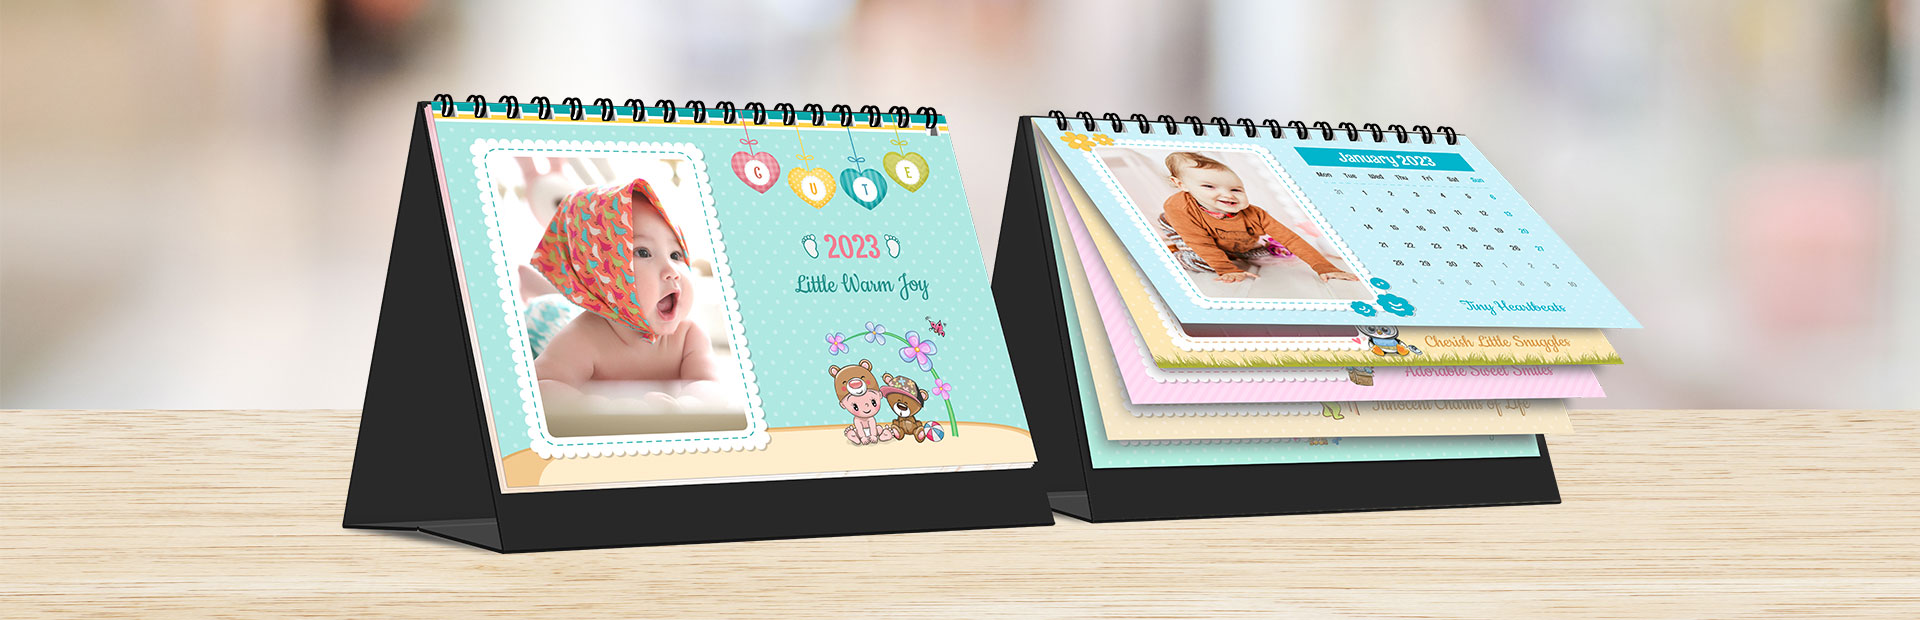 Baby Joy Photo Calendars Online